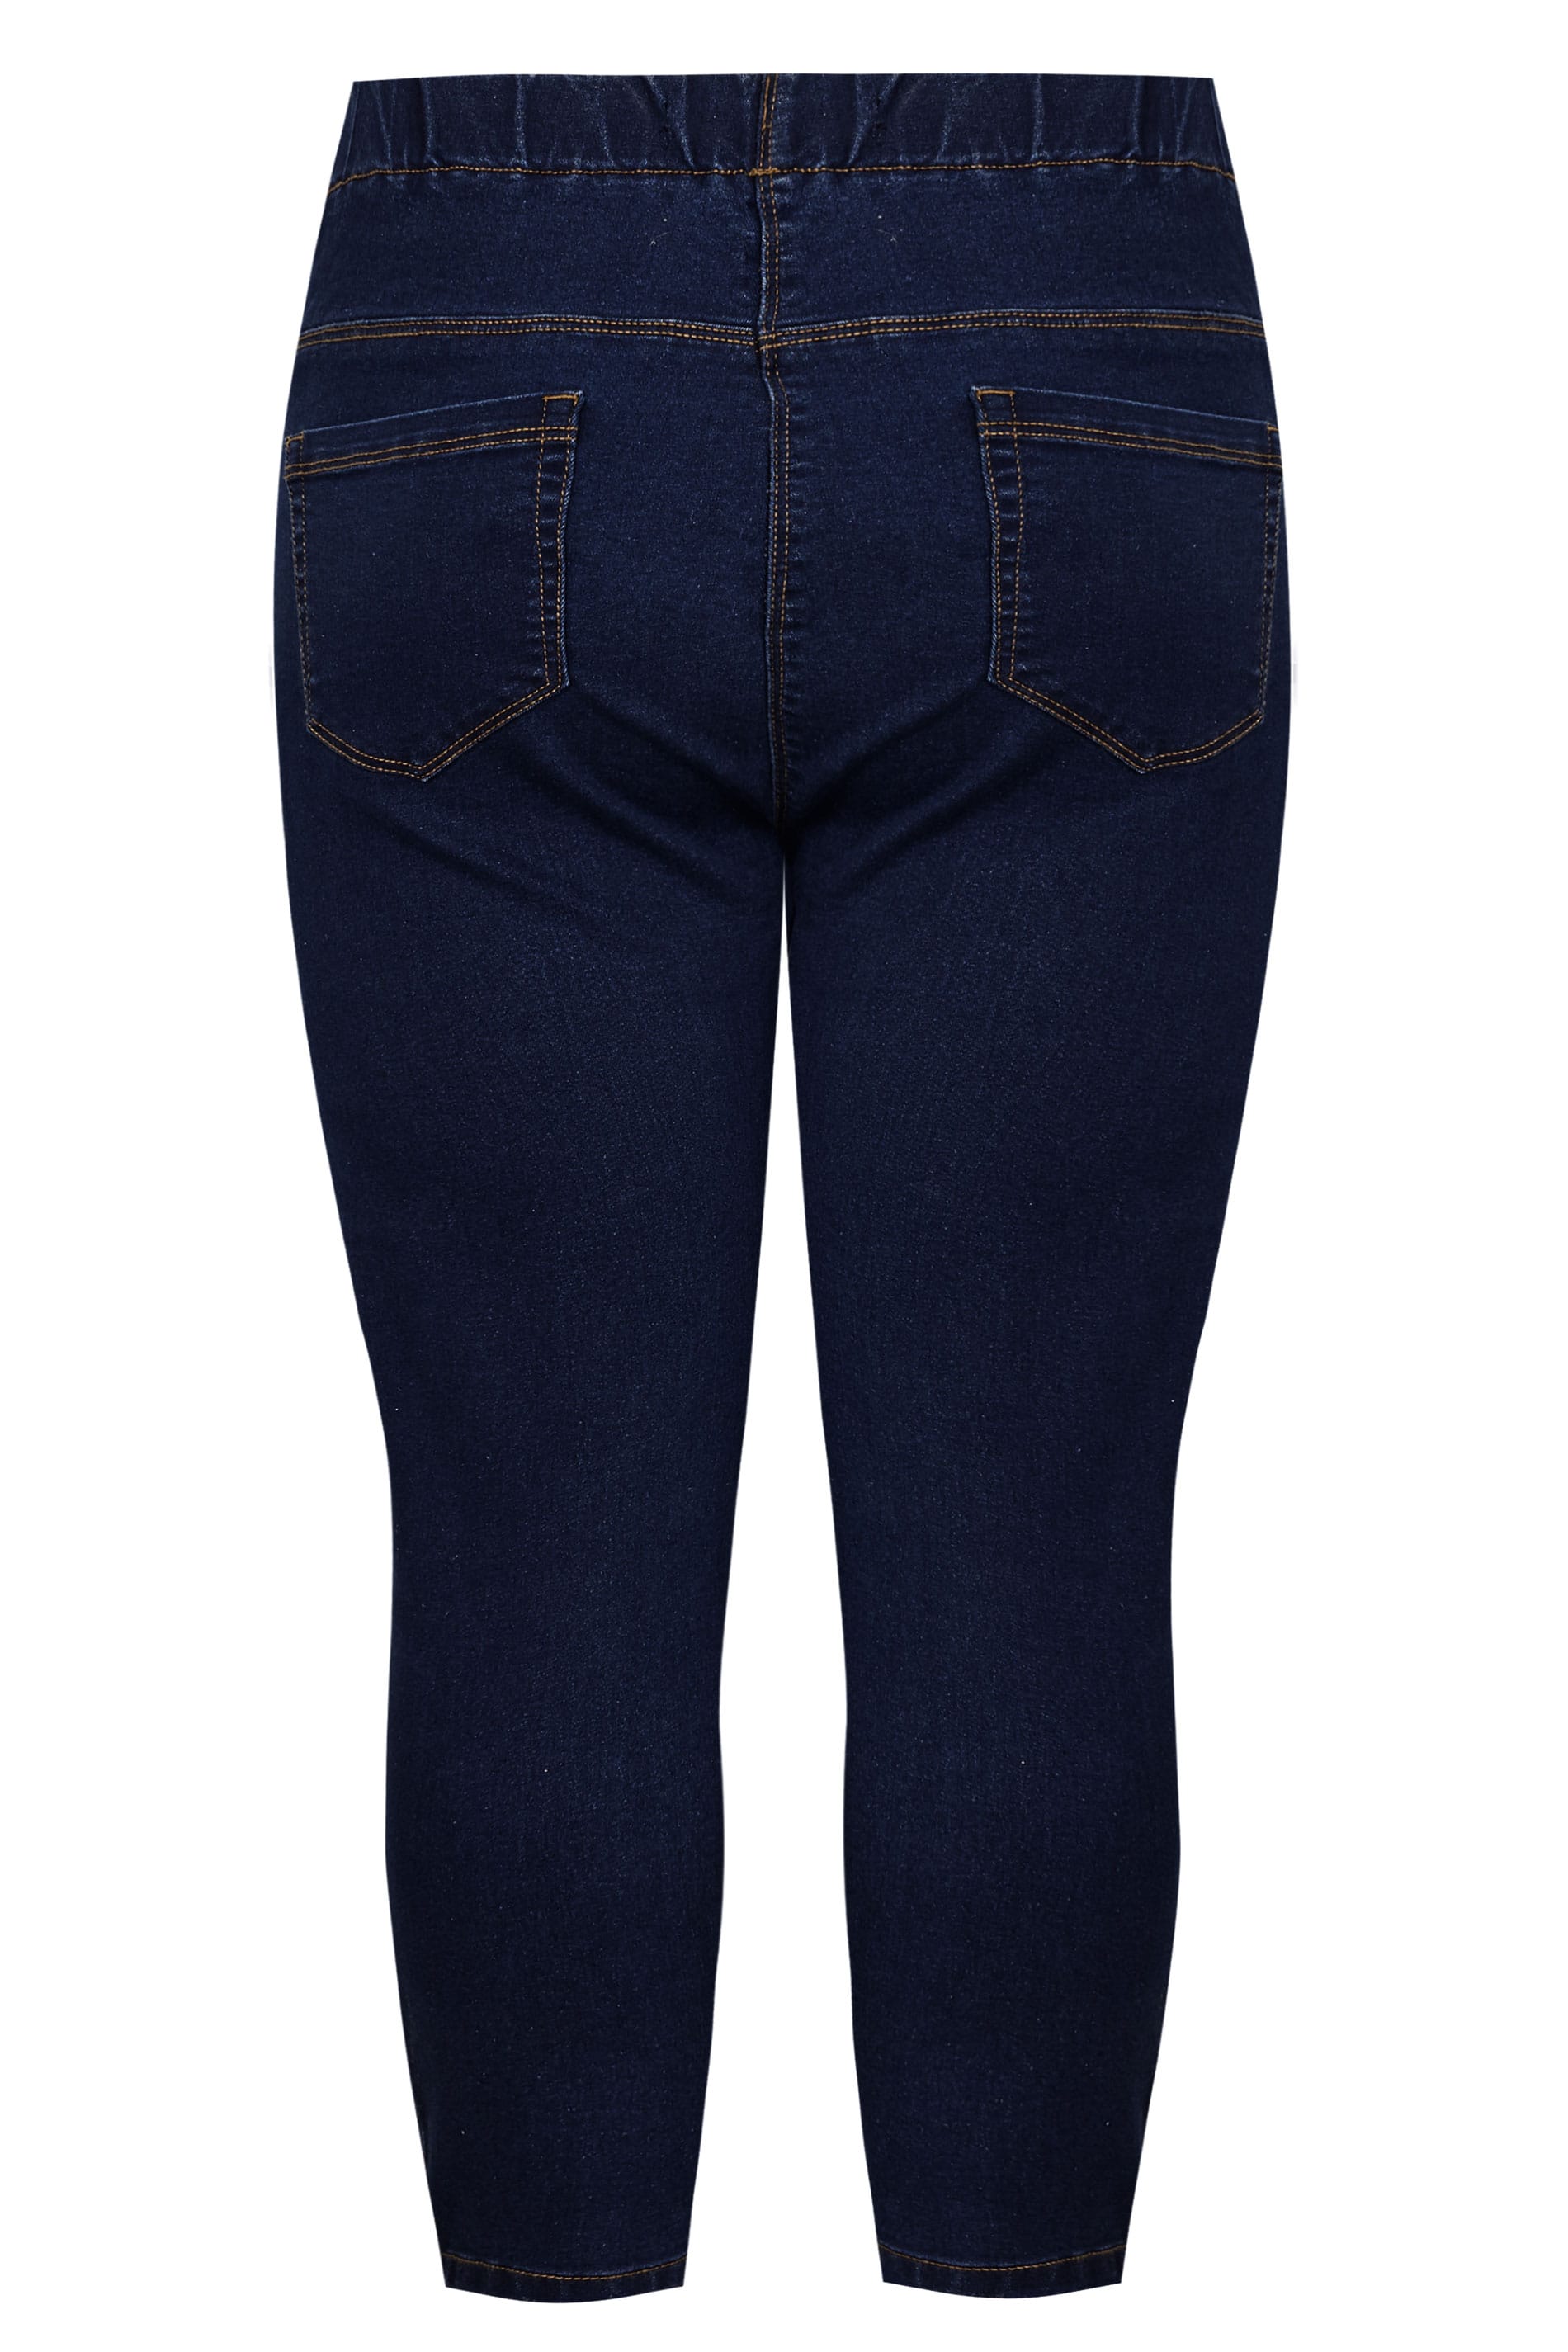 Mango Jeggings & Skinny & Slim Brown 36                  EU discount 75% WOMEN FASHION Jeans Basic 